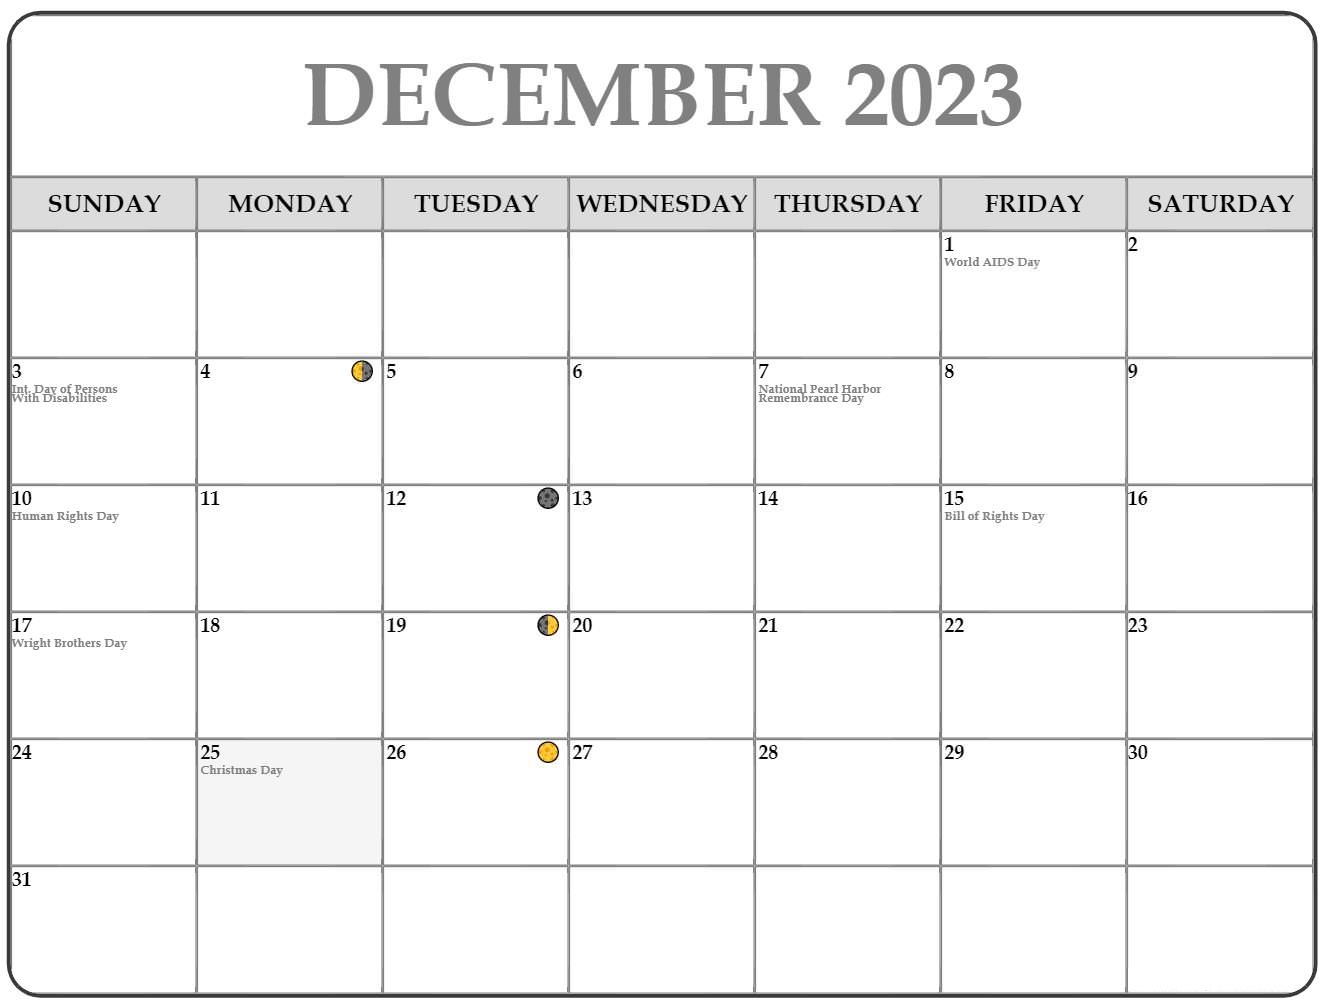 December 2023 Moon Phase Calendar